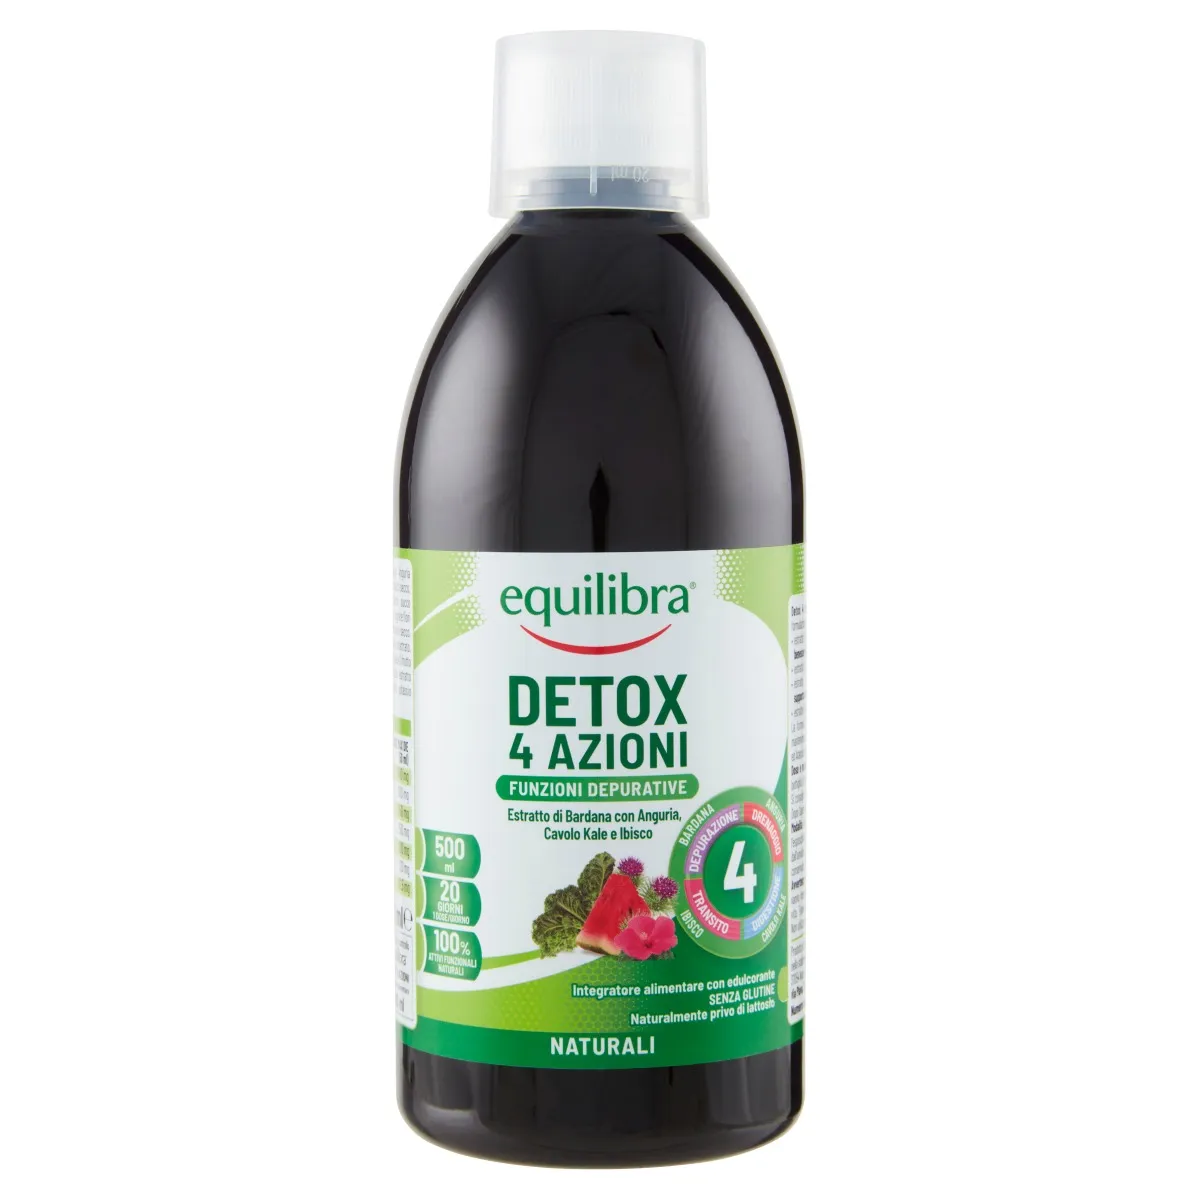 Equilibra Detox 4 Azioni Gusto Frutta 500 ml Depurativo Drenante